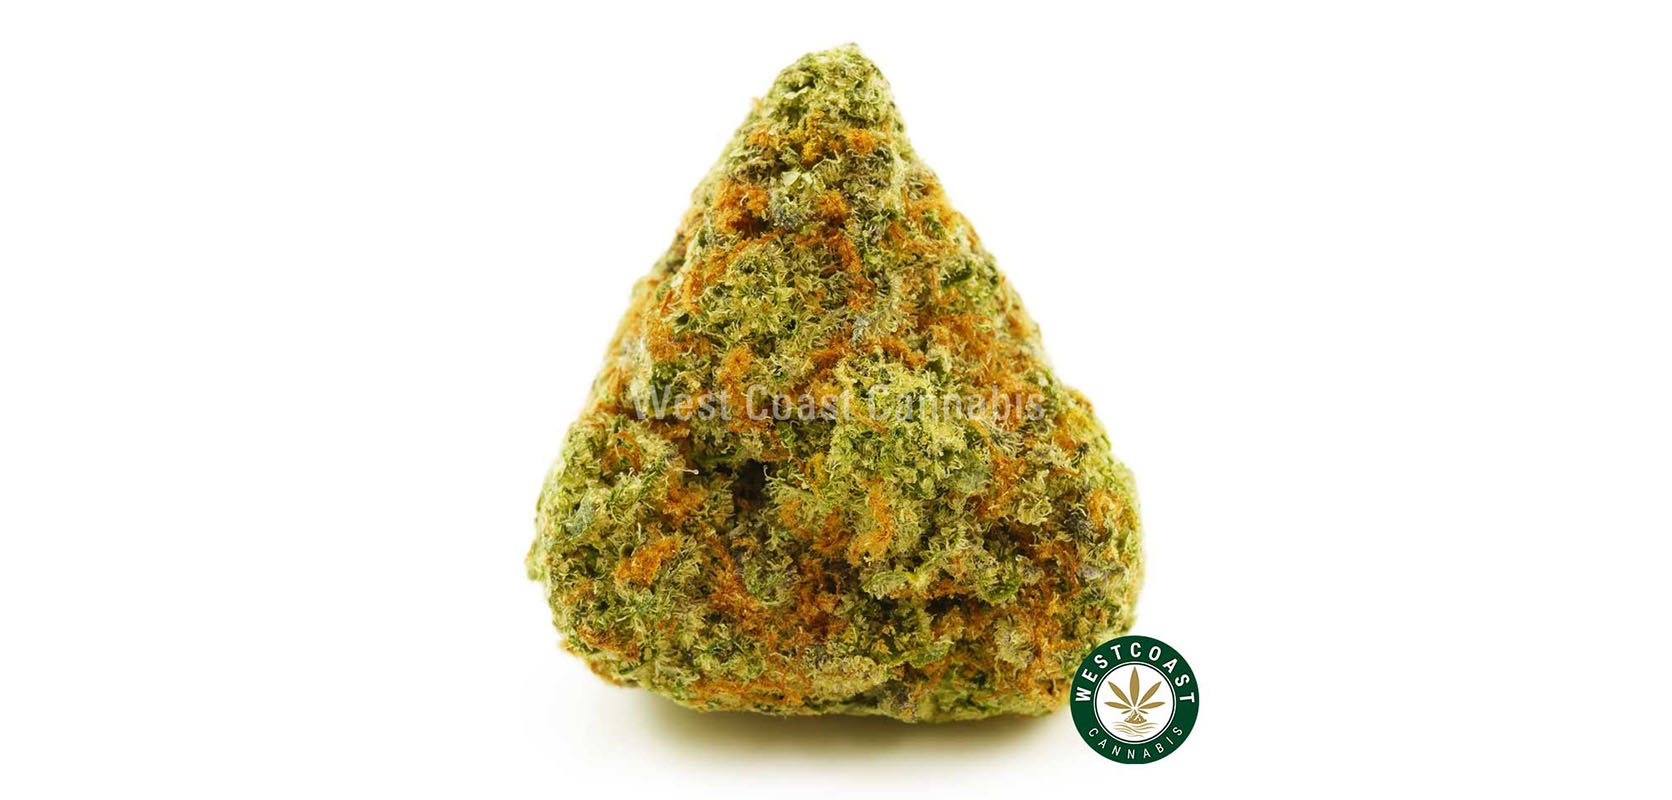 buy Acai Berry Gelato weed strain online mail order marijuana dispensary in BC Canada.